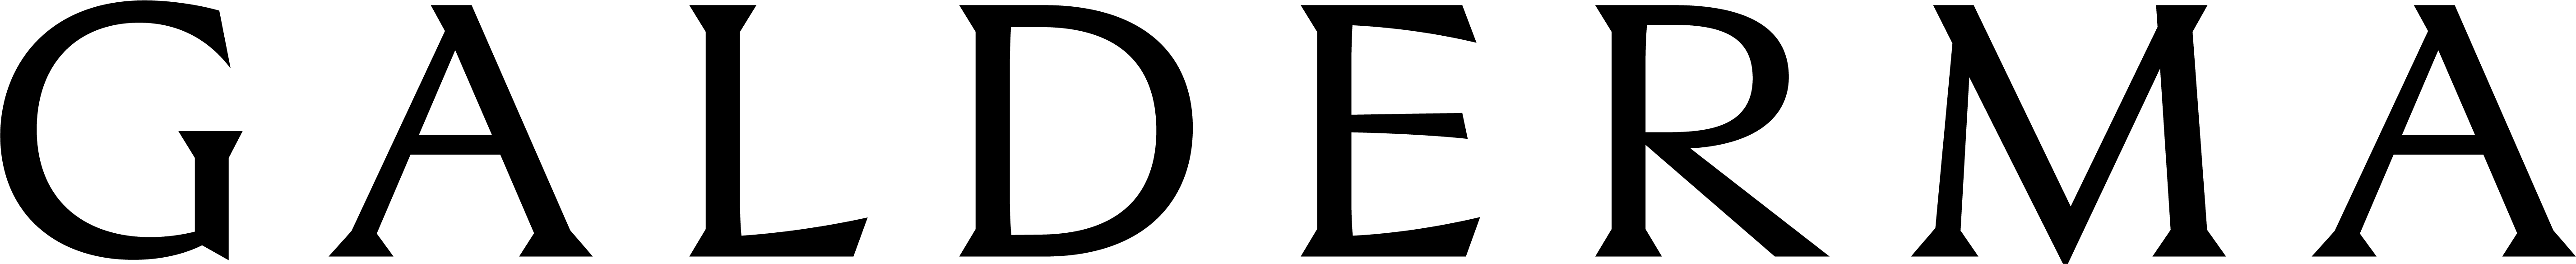 galderma logo